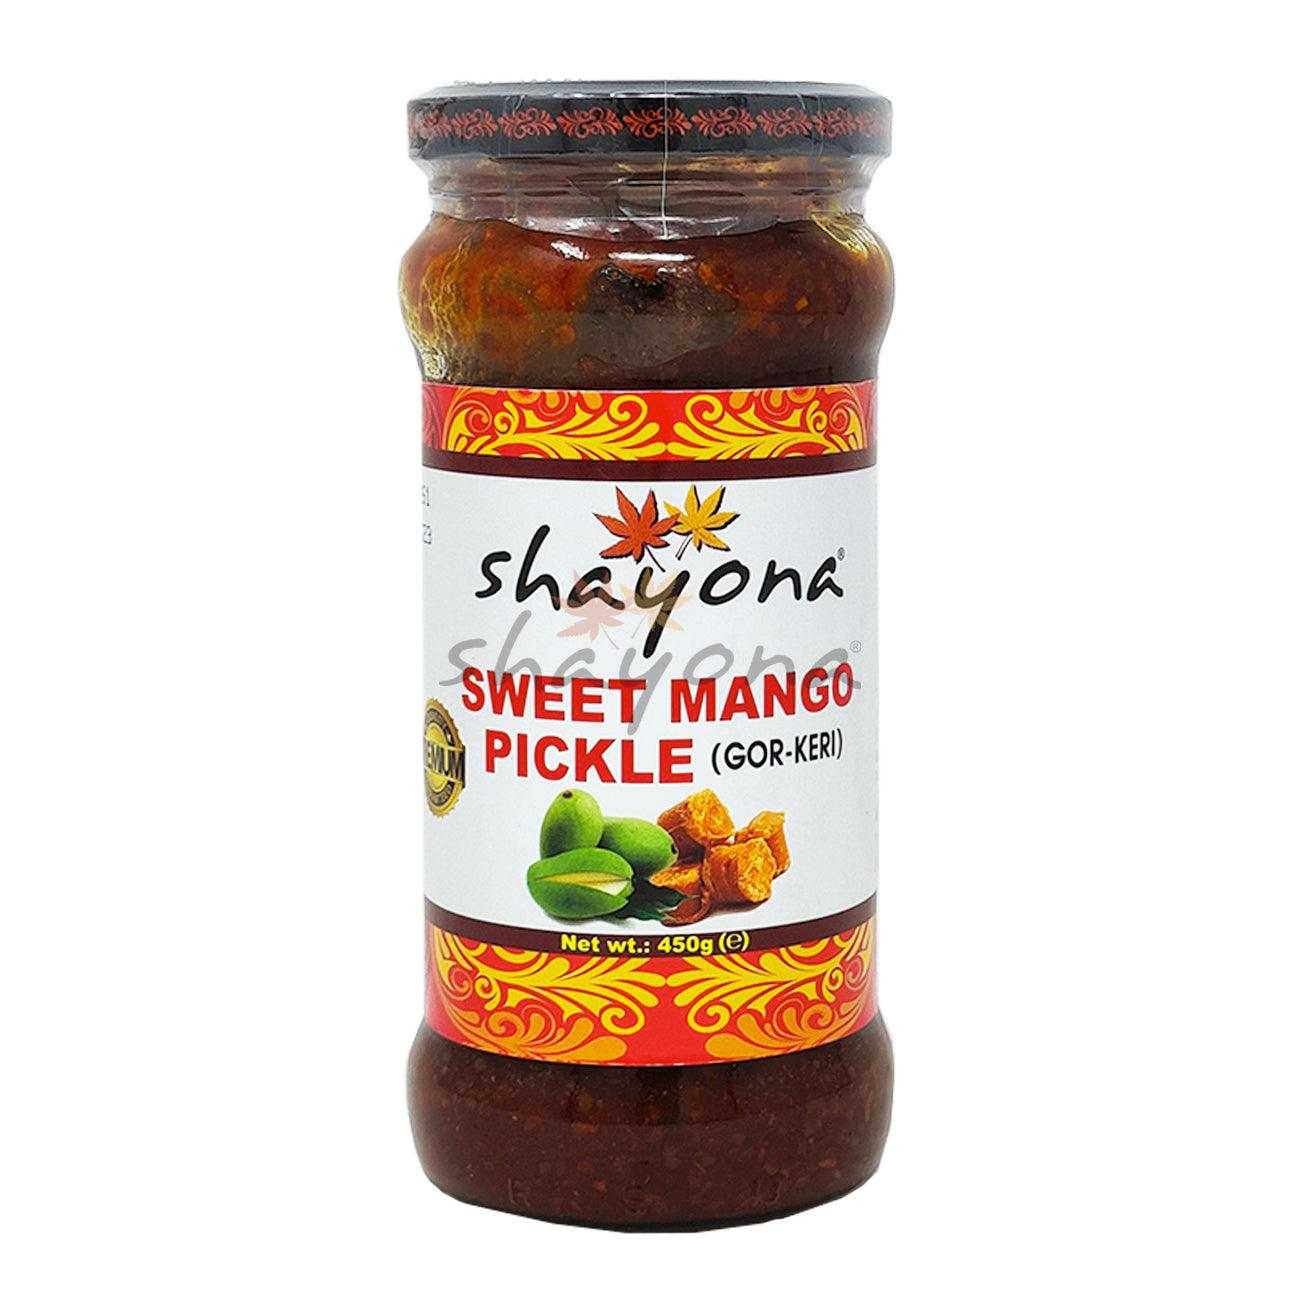 Shayona Sweet Mango Pickle (Gor-Keri)